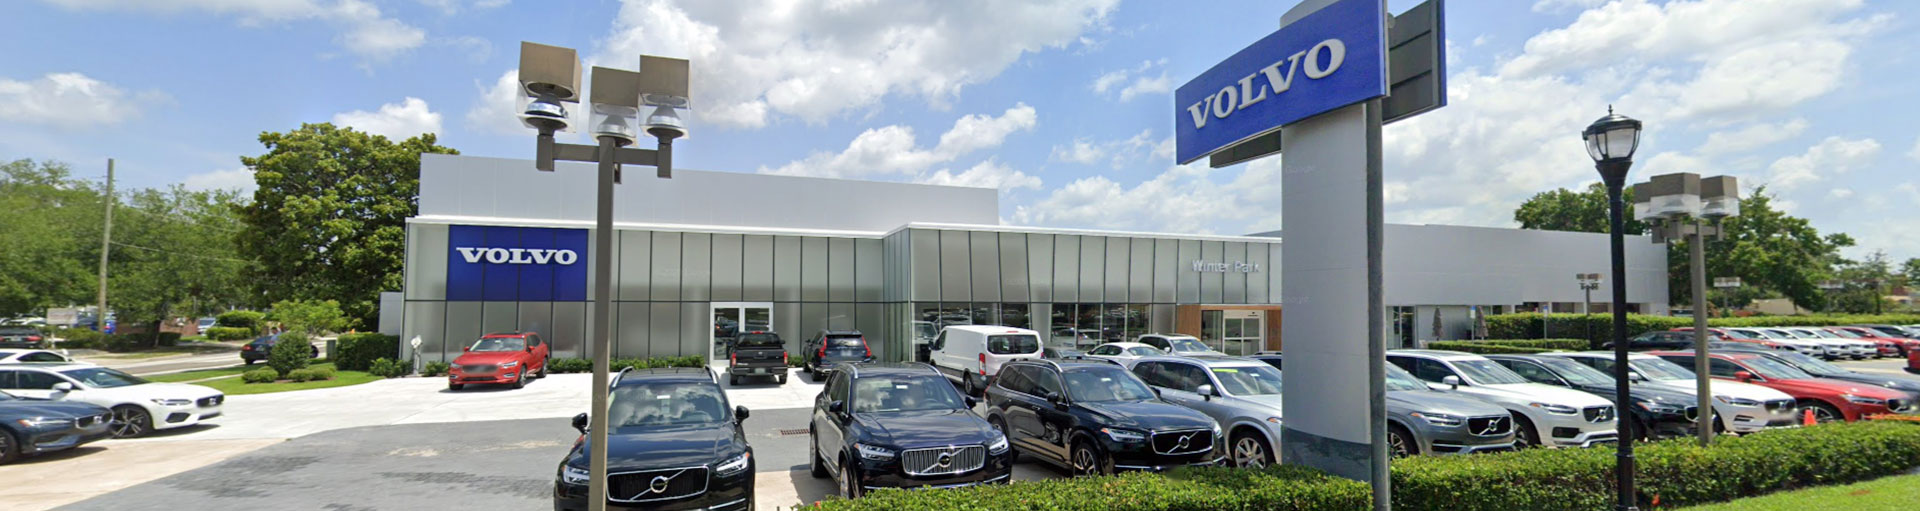 The Volvo Store Service and Repair in Orlando, FL